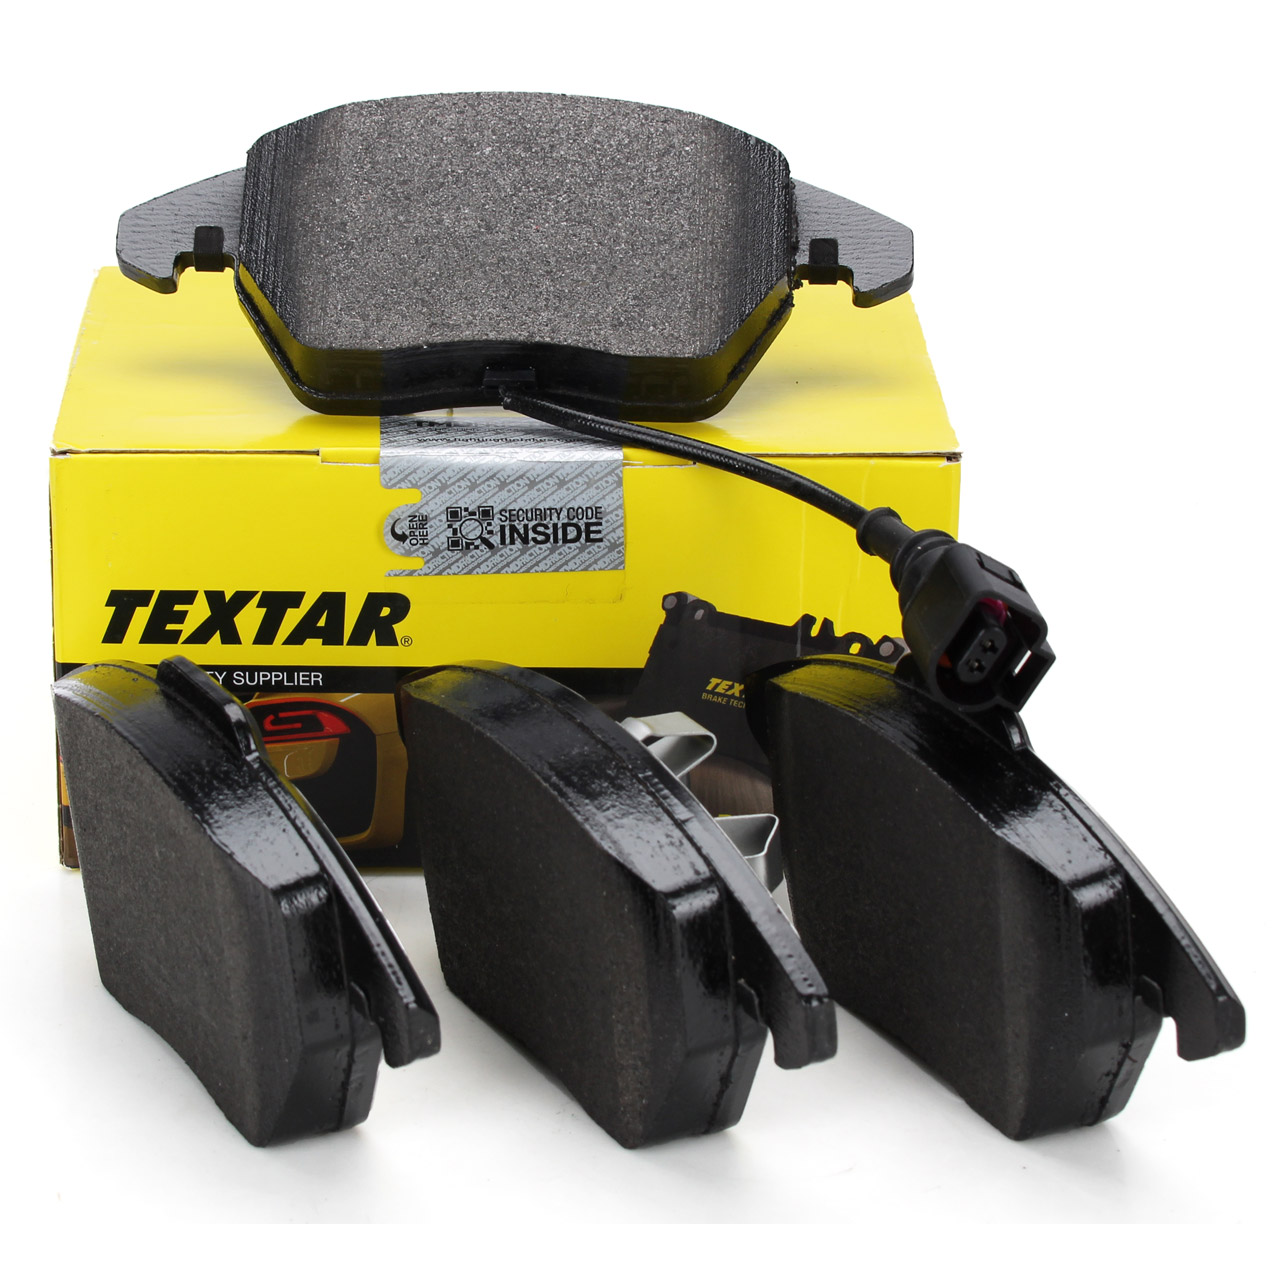 TEXTAR Bremsen Sets - 92120805, 2358701 